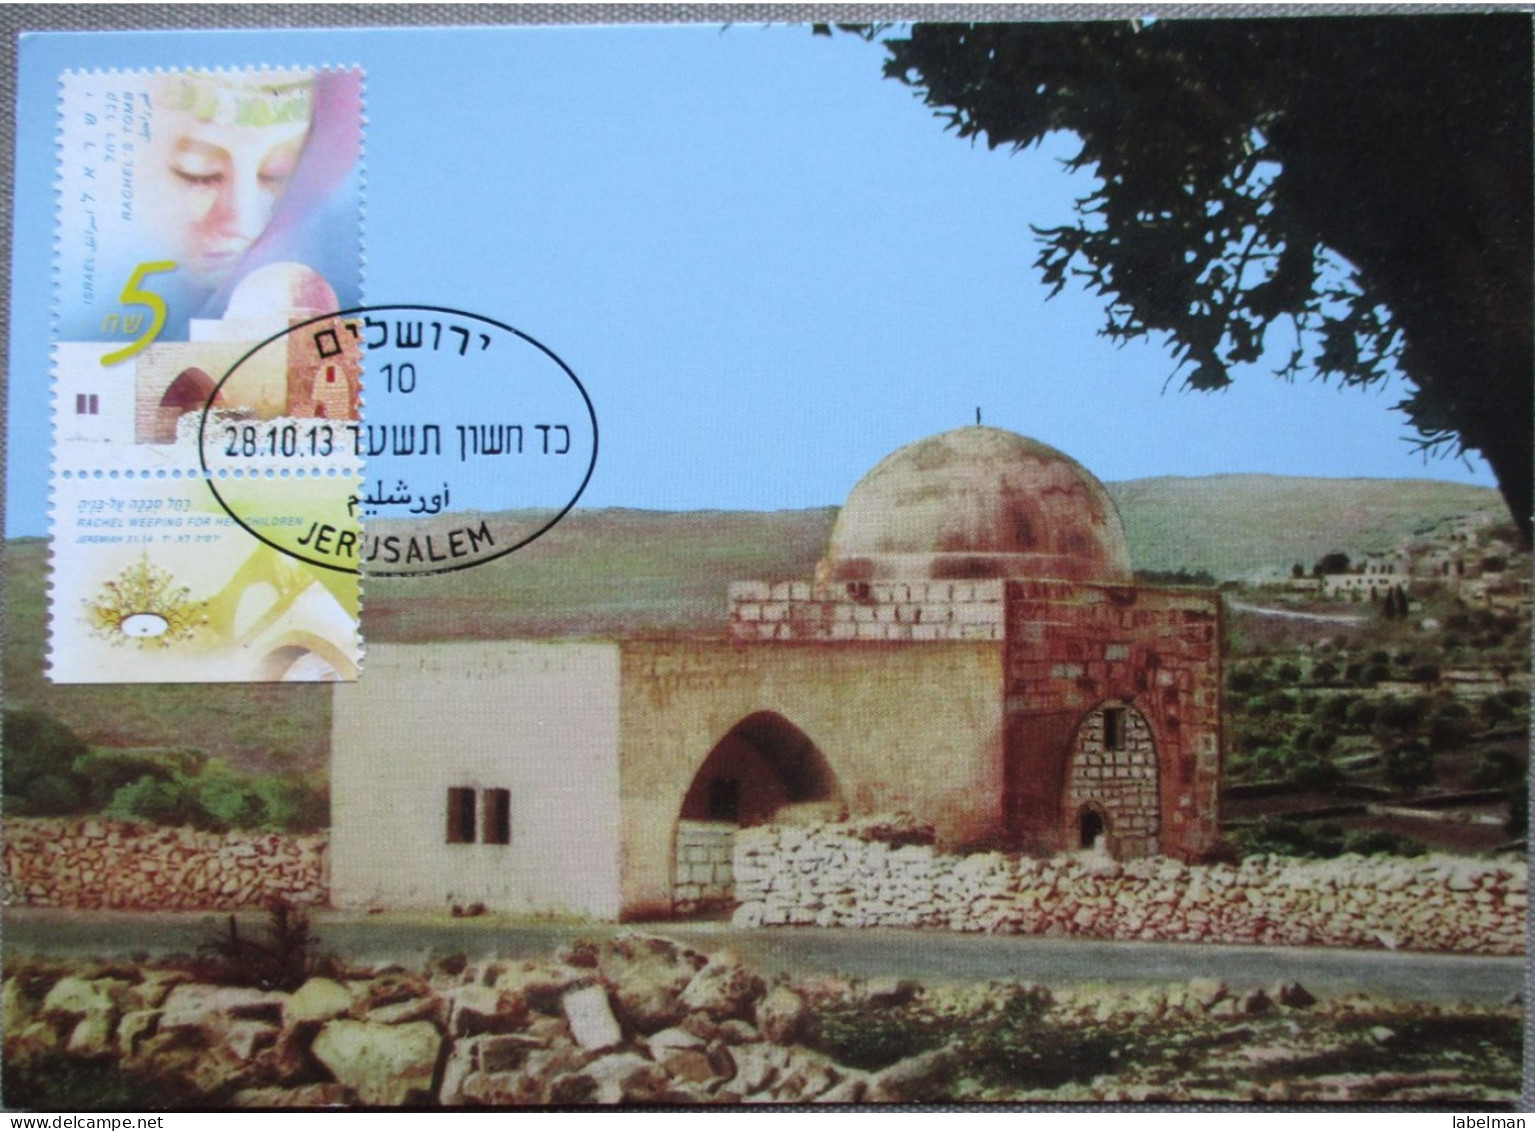 ISRAEL 2013 MAXIMUM CARD POSTCARD BETHLEHEM RACHEL TOMB FIRST DAY OF ISSUE CARTOLINA CARTE POSTALE POSTKARTE CARTOLINA - Cartoline Maximum